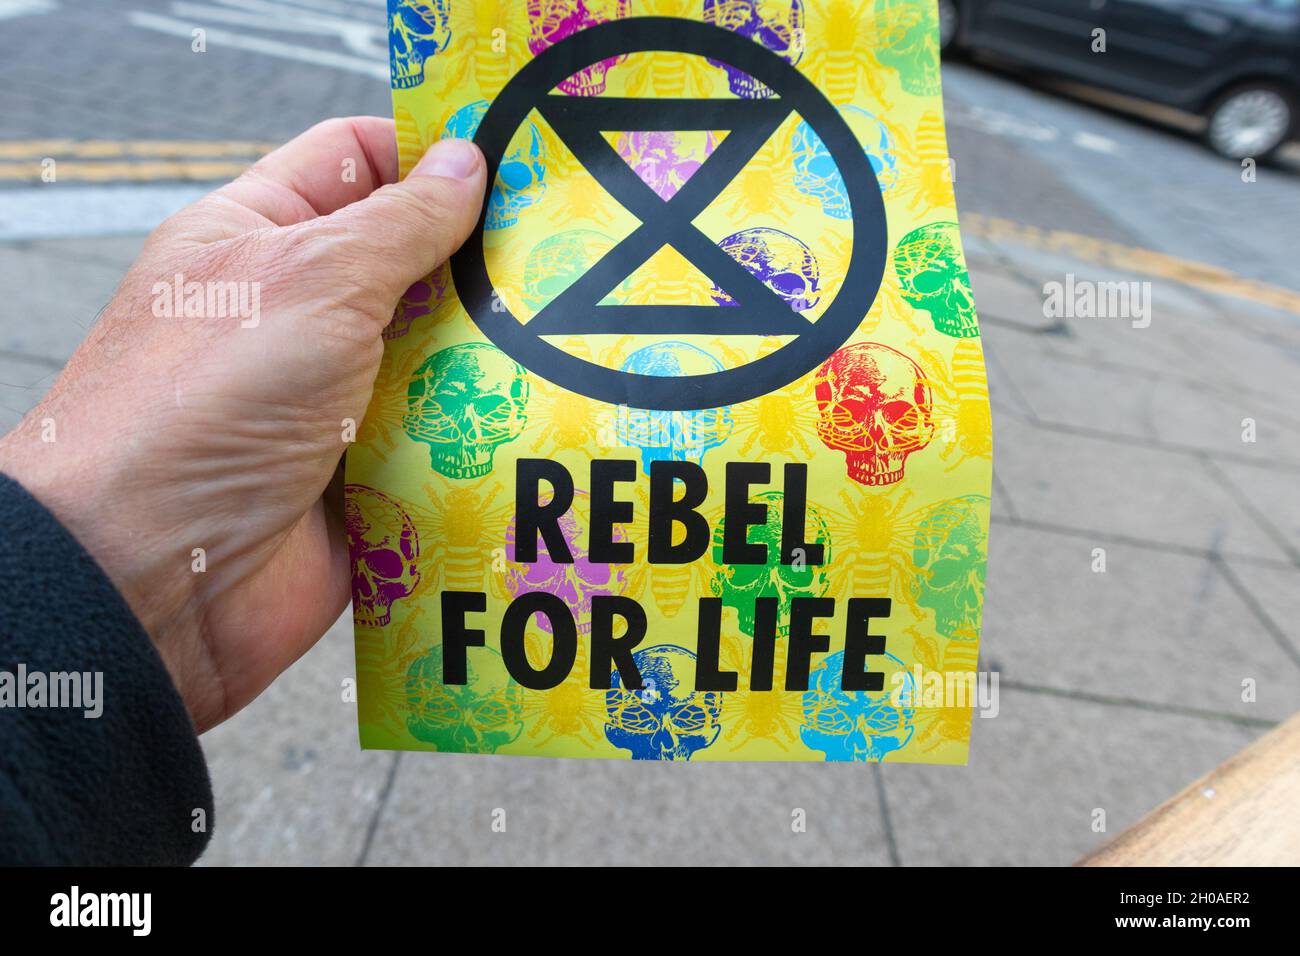 Rebel for life flyer, xr extinction rebellion propaganda, uk Stock Photo